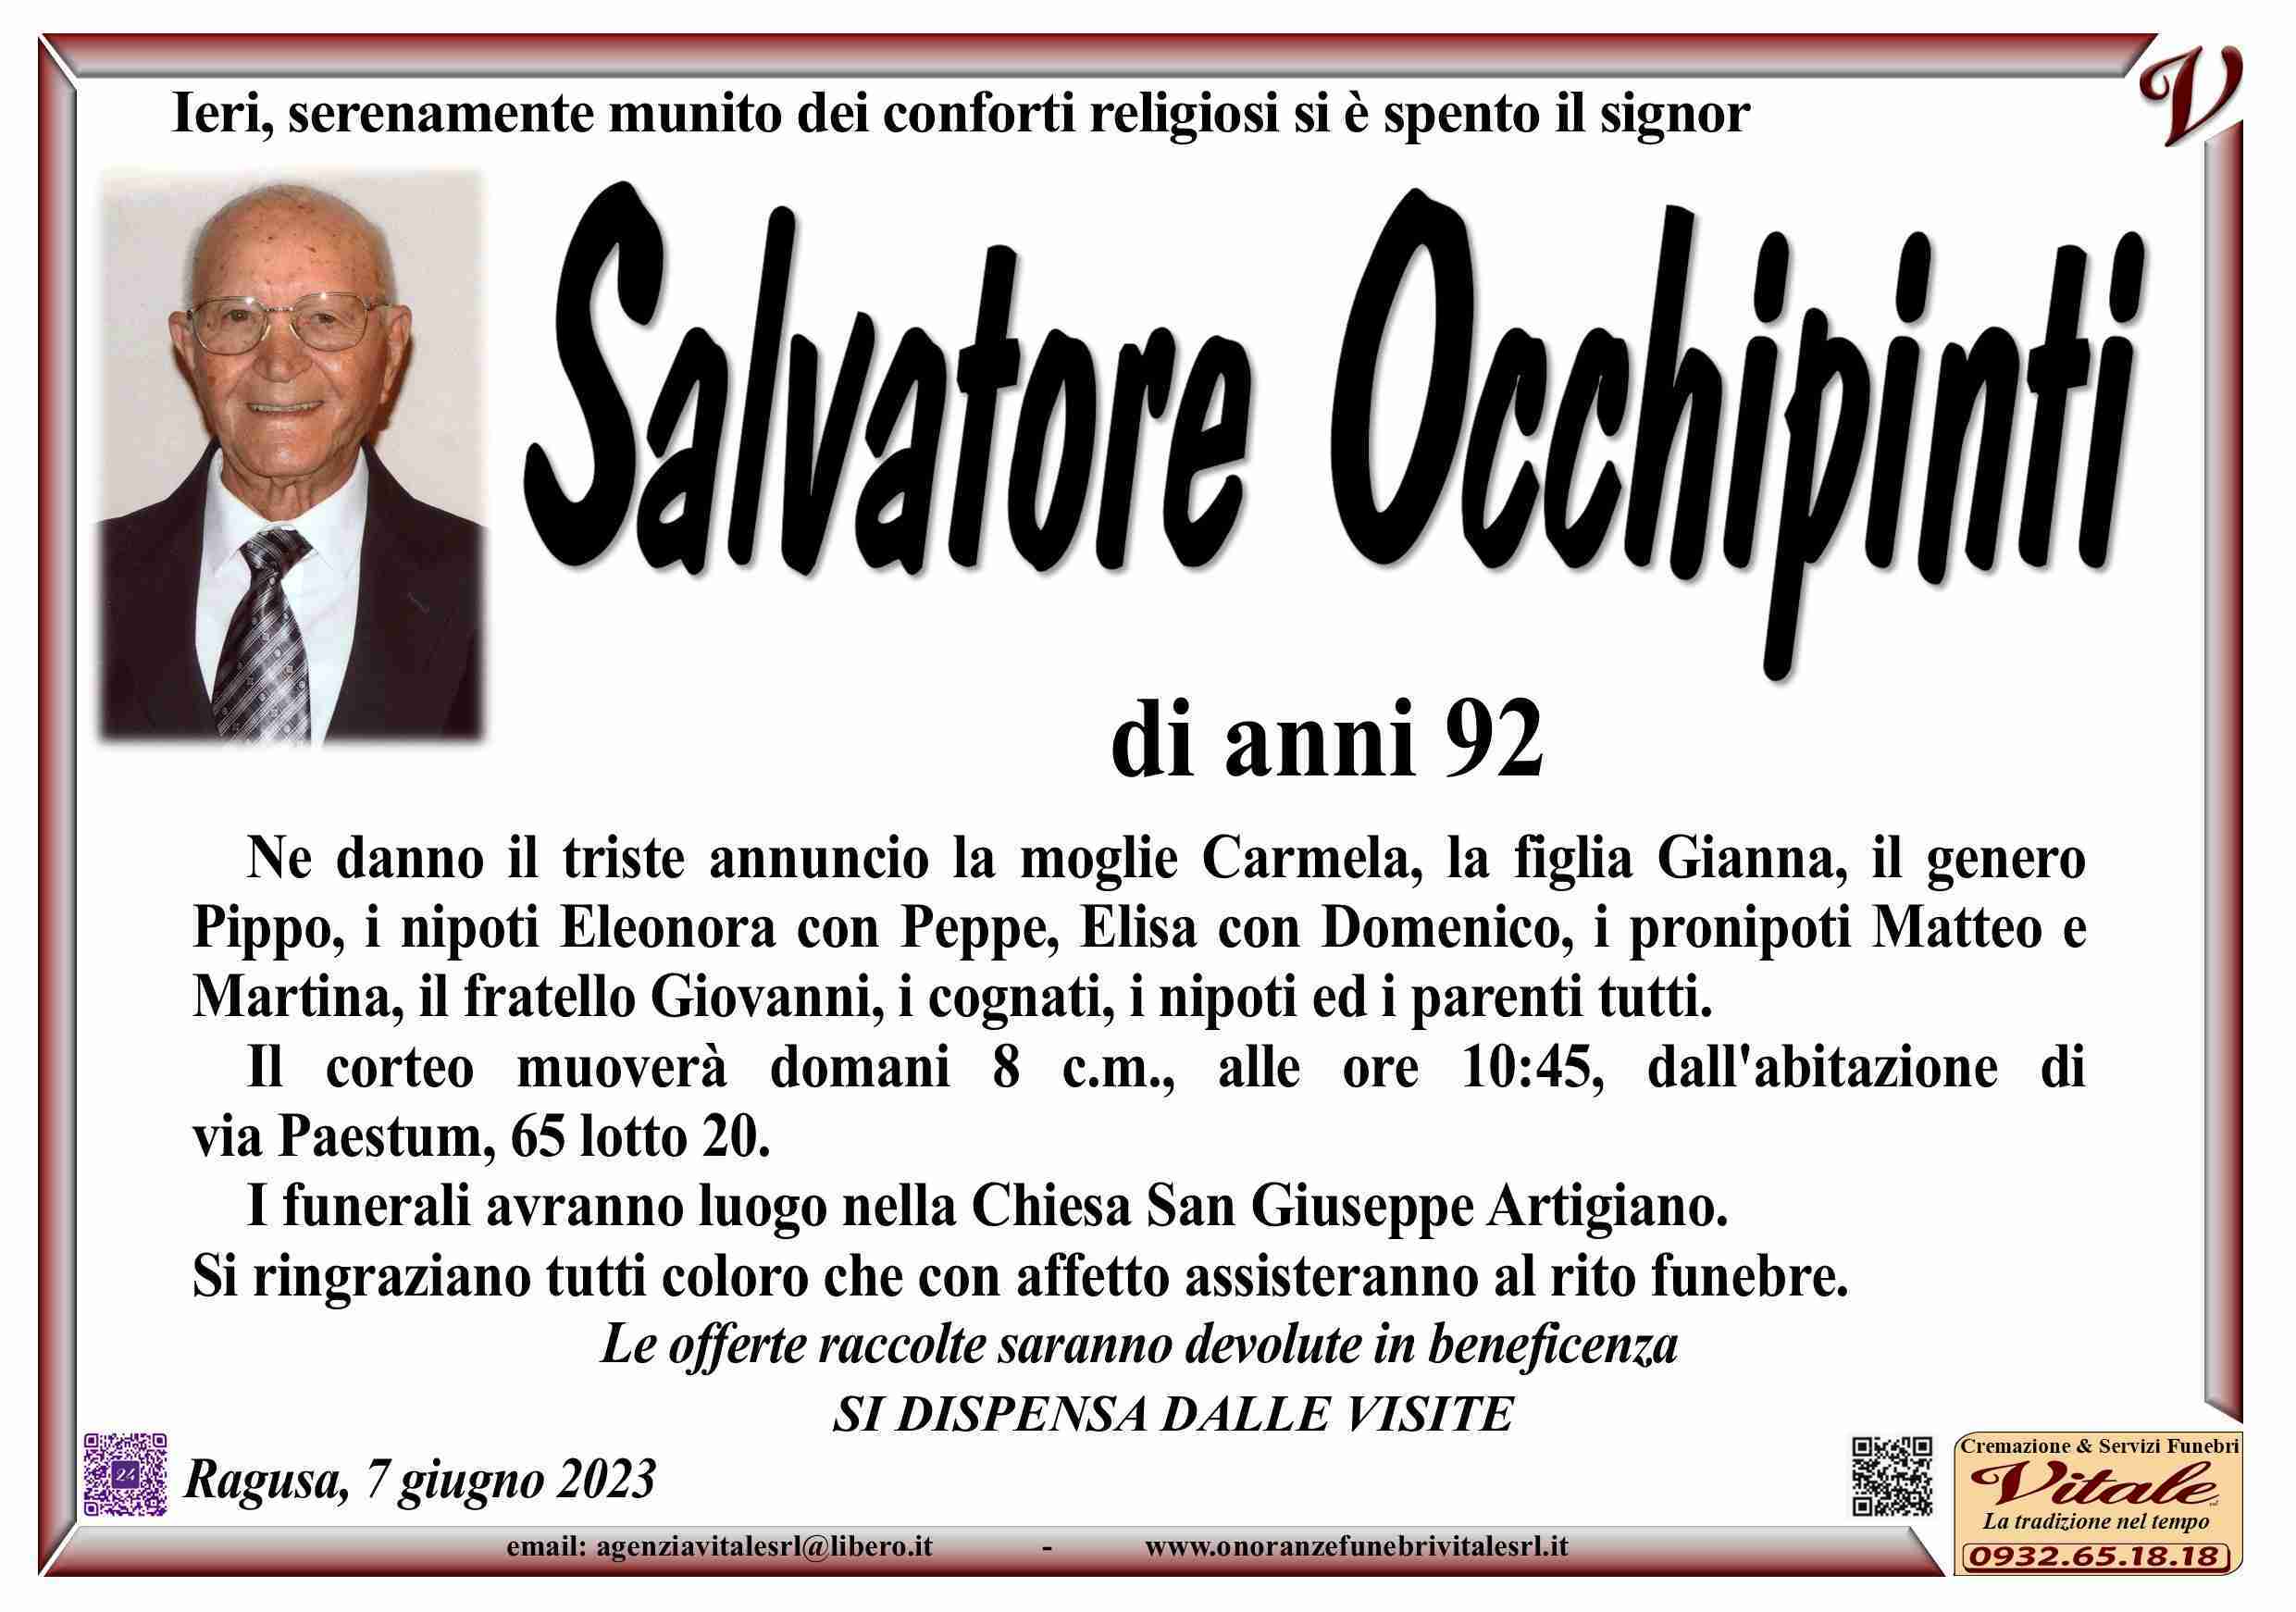 Salvatore Occhipinti